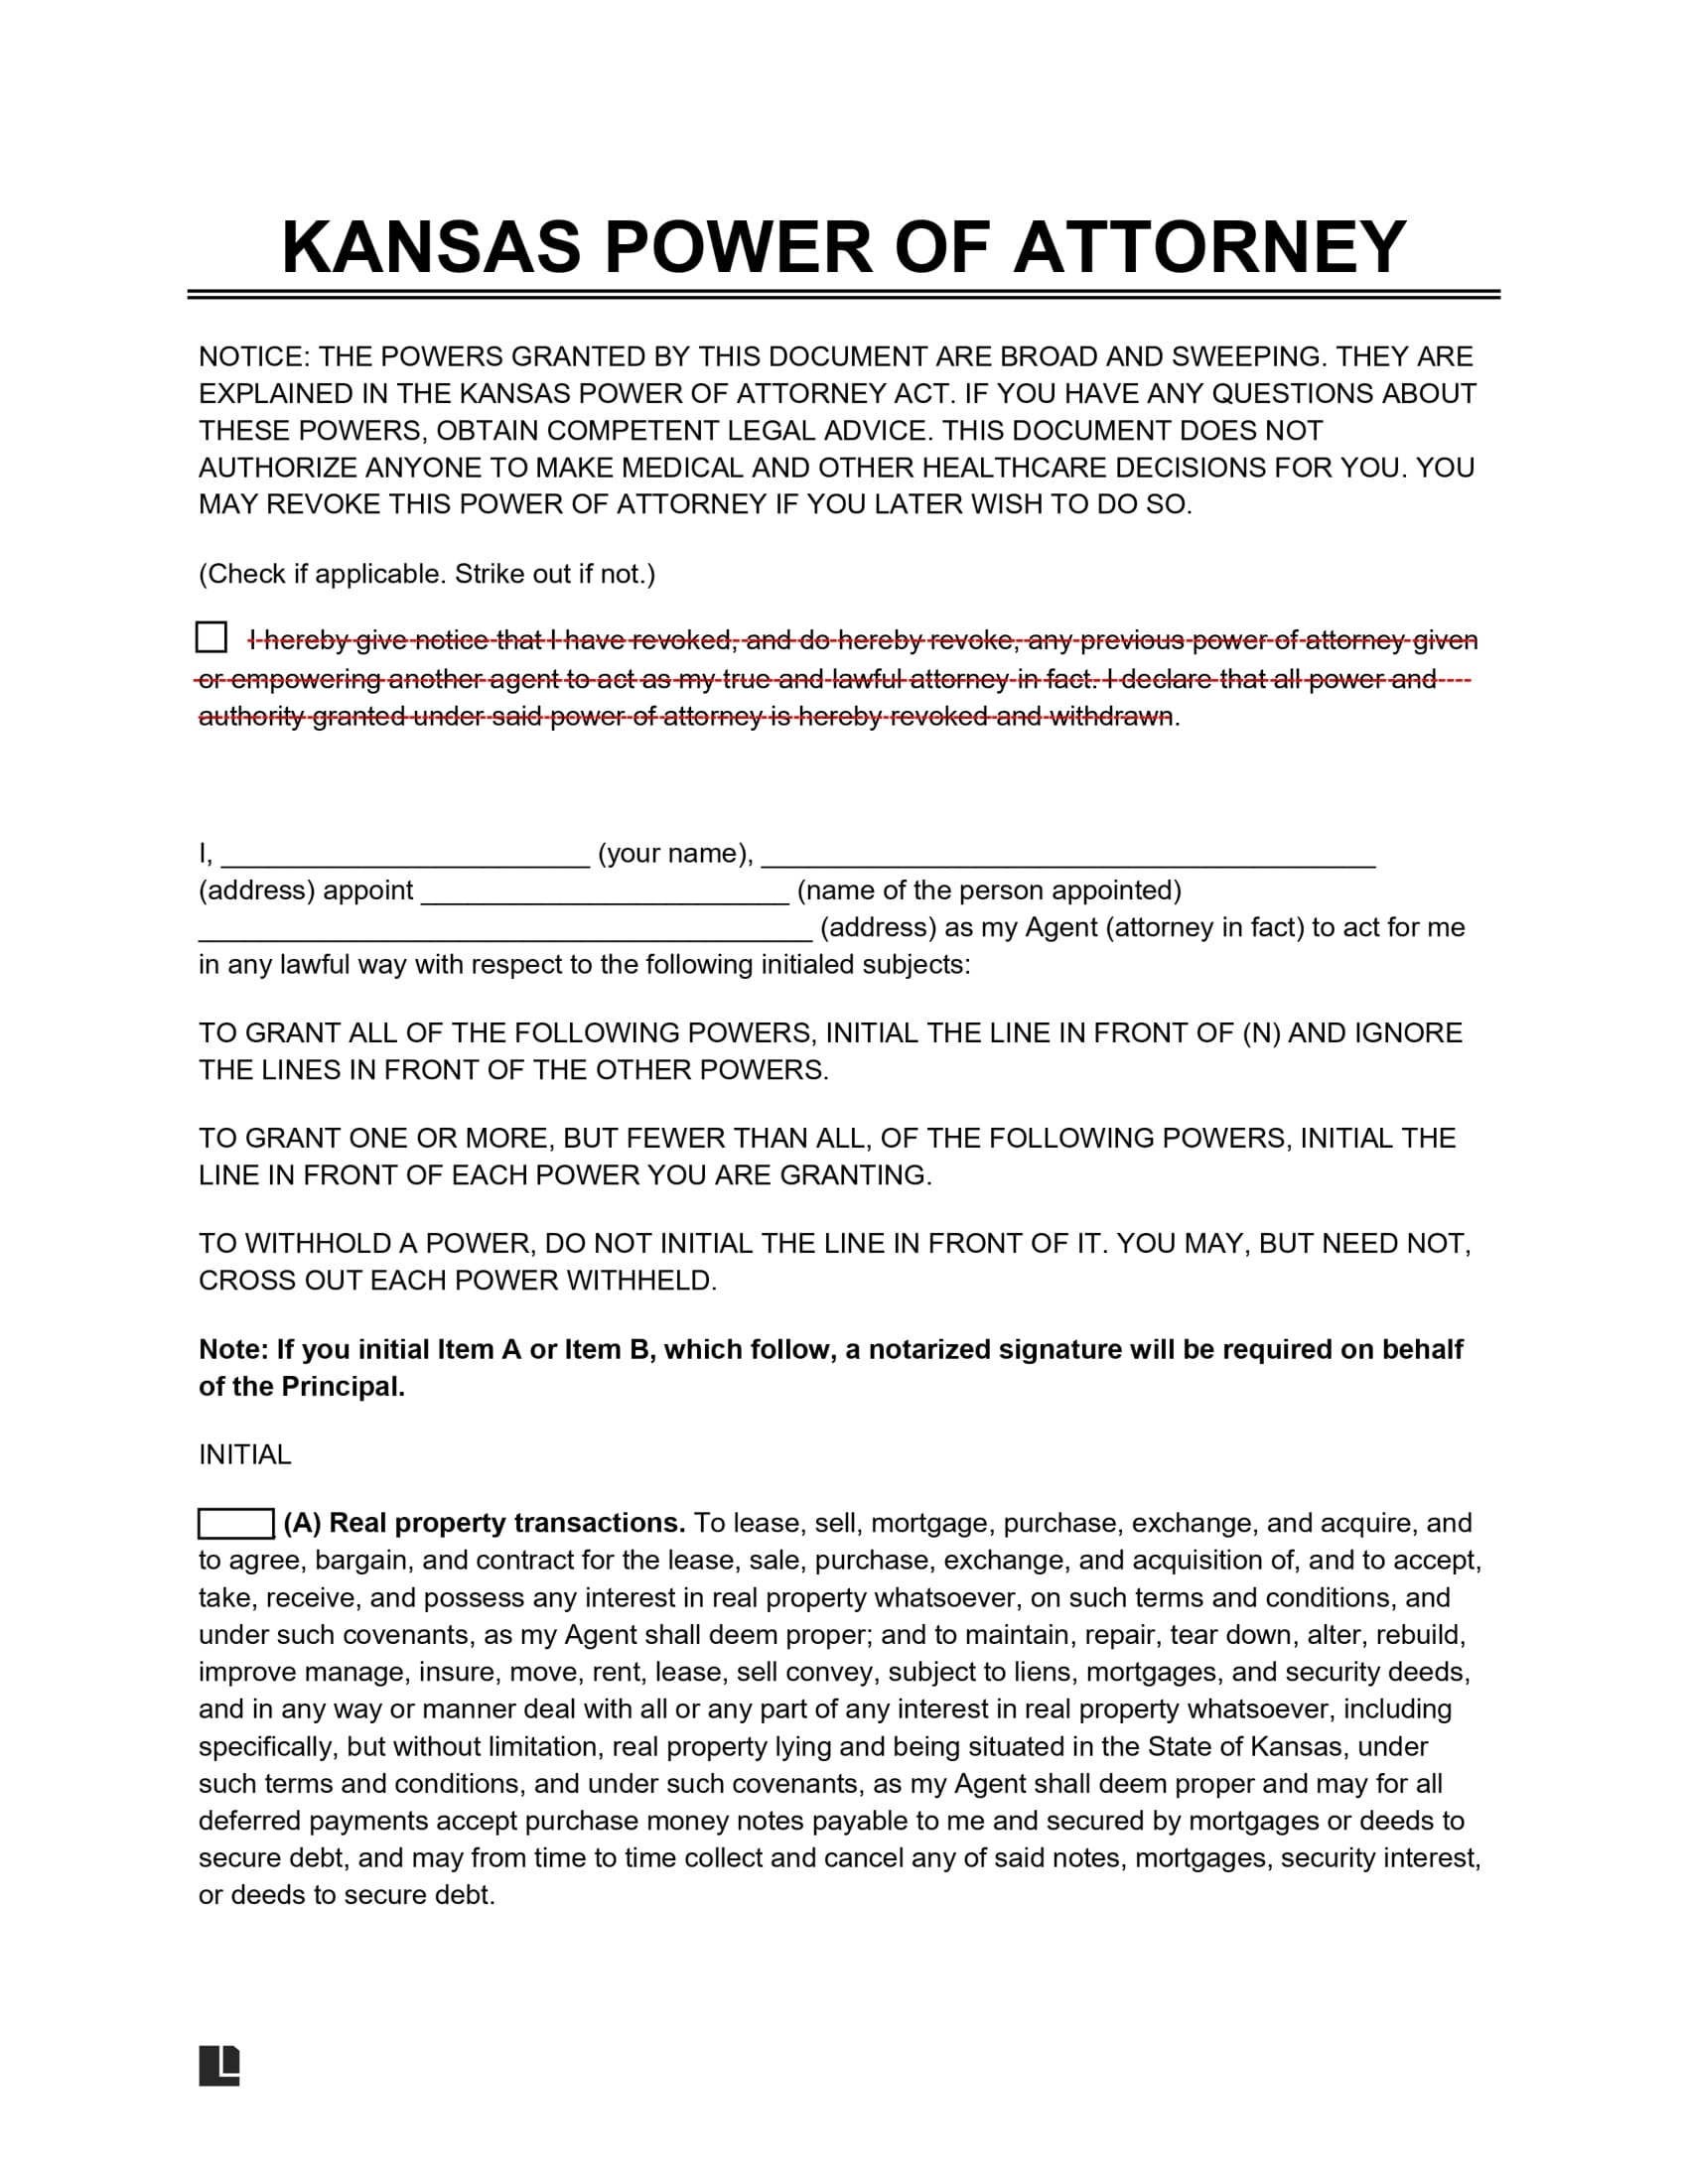 Kansas Power of Attorney Form